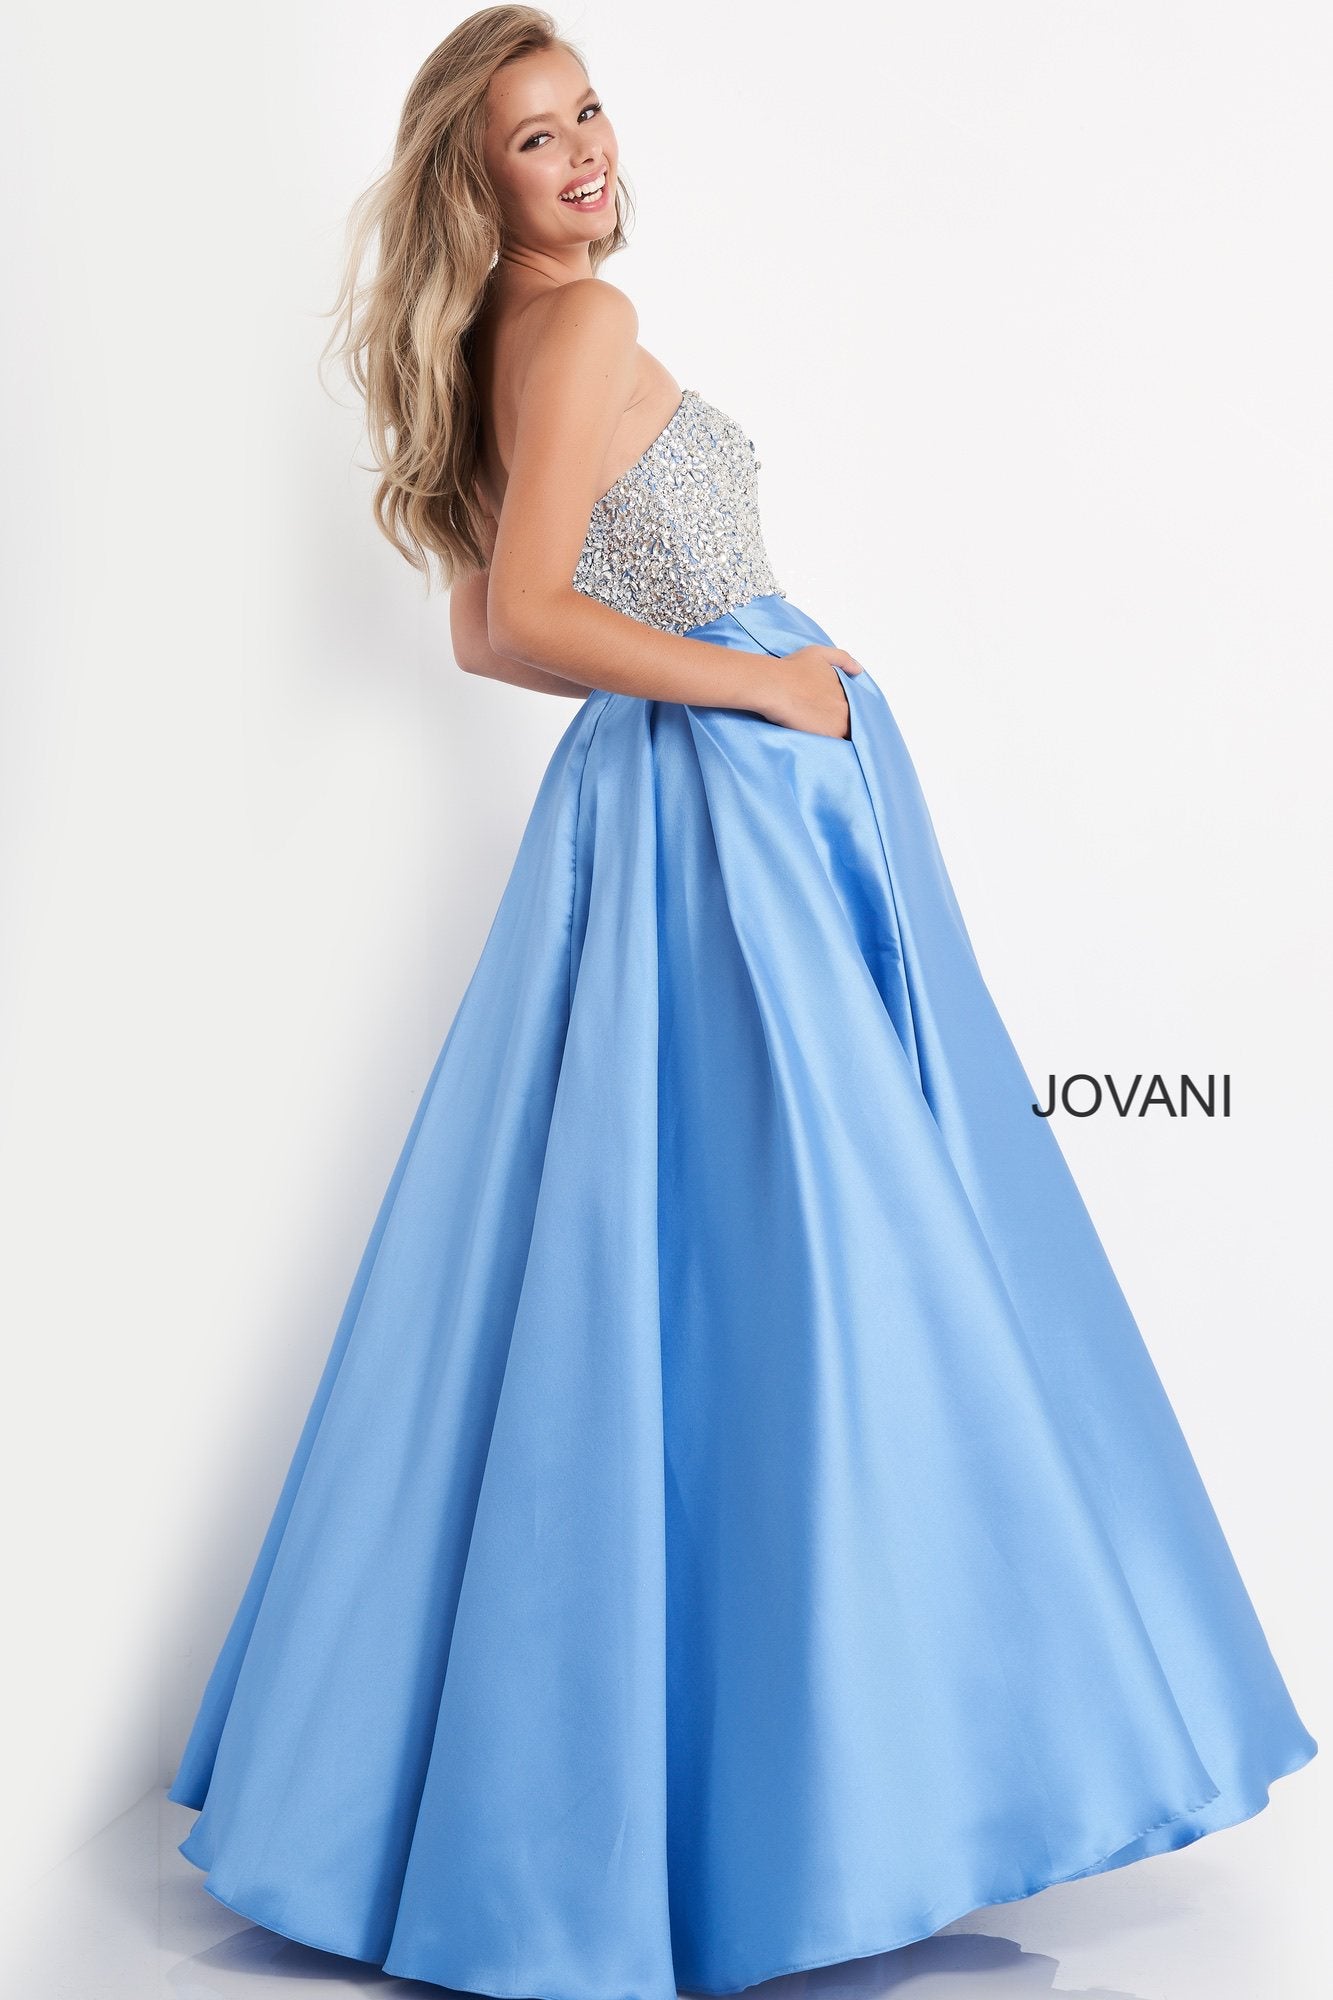 Astonishing powder blue color party-wear Gown – Panache Haute Couture